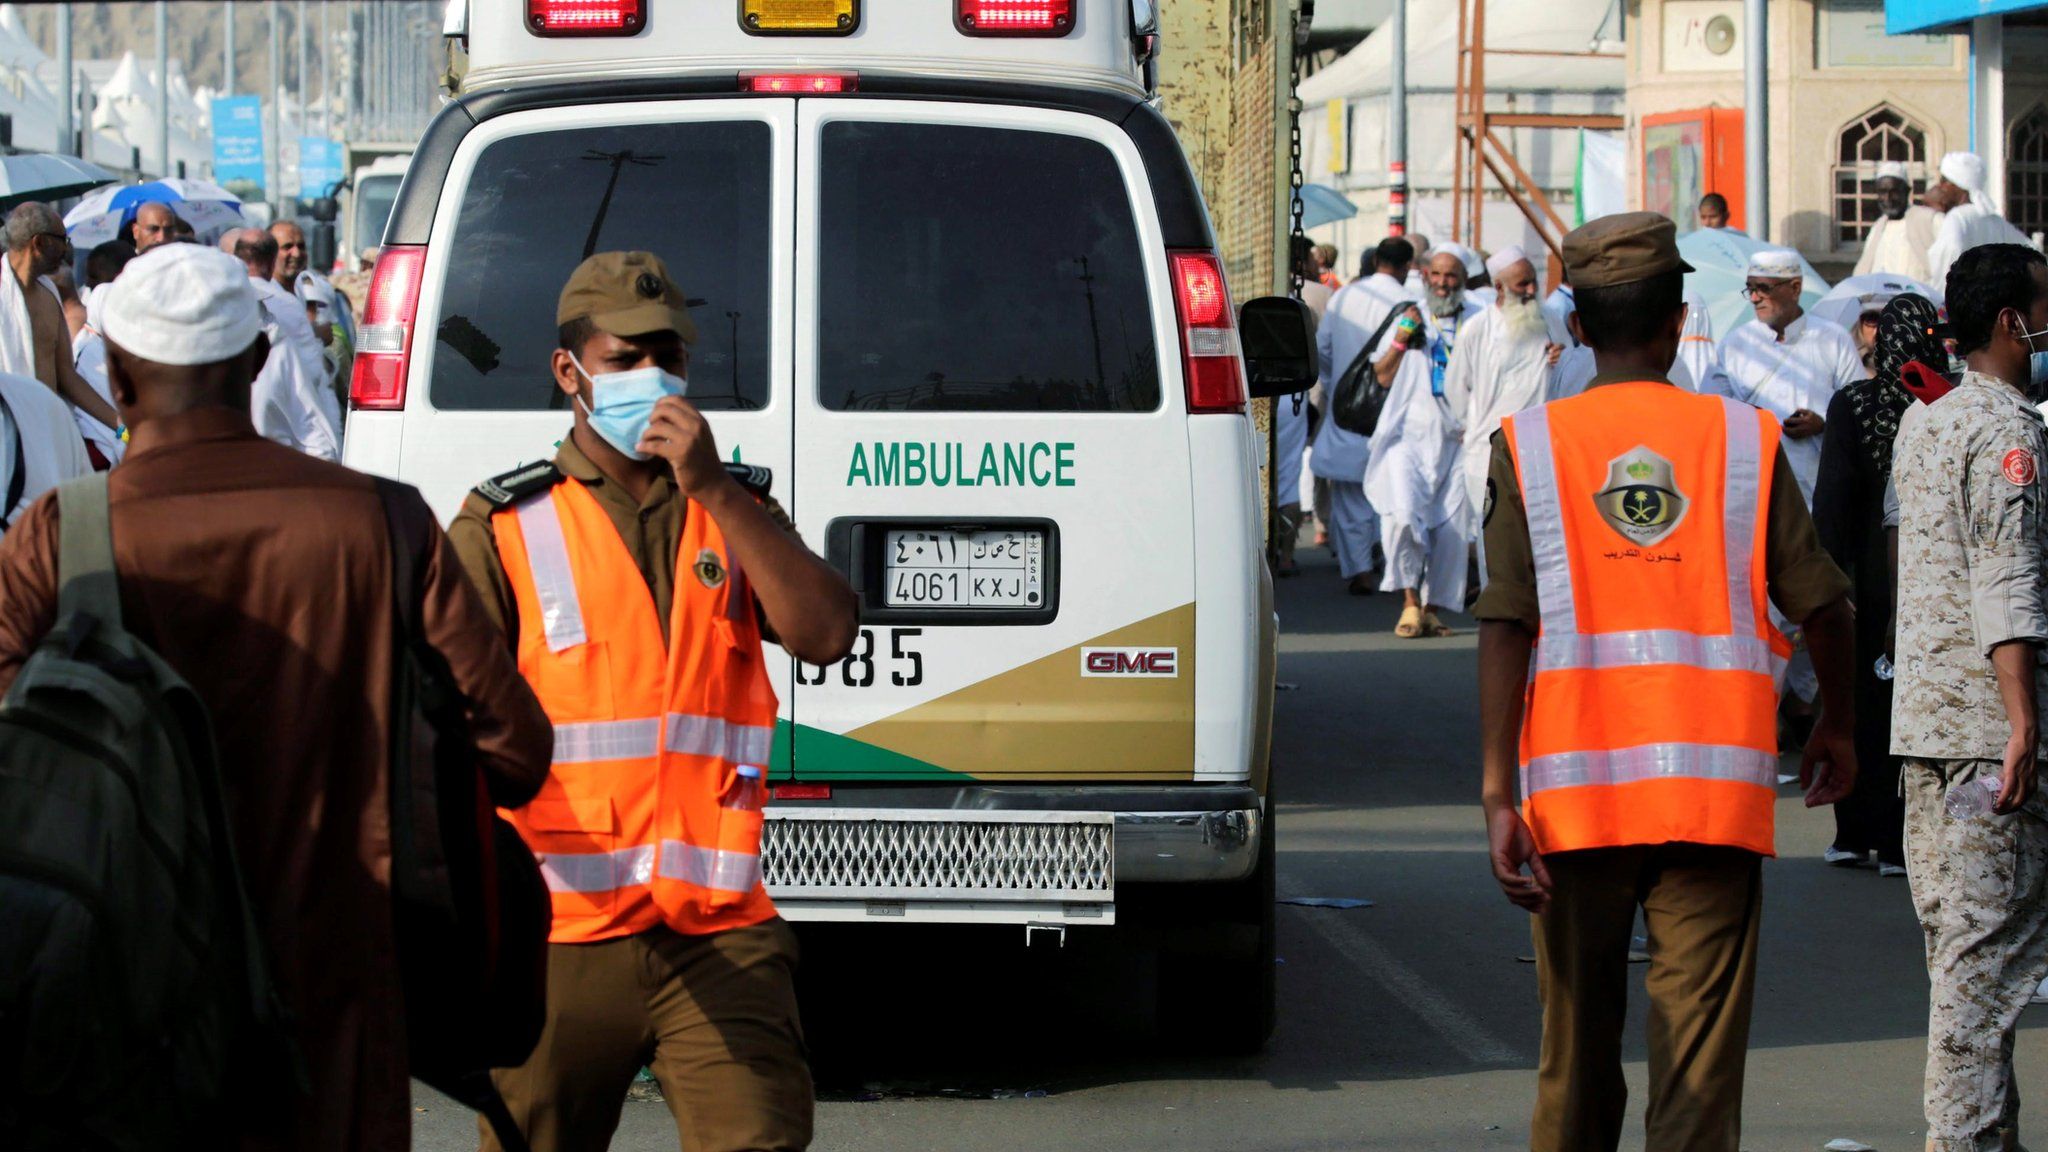 Medics and an ambulance in Mina, Saudi Arabia